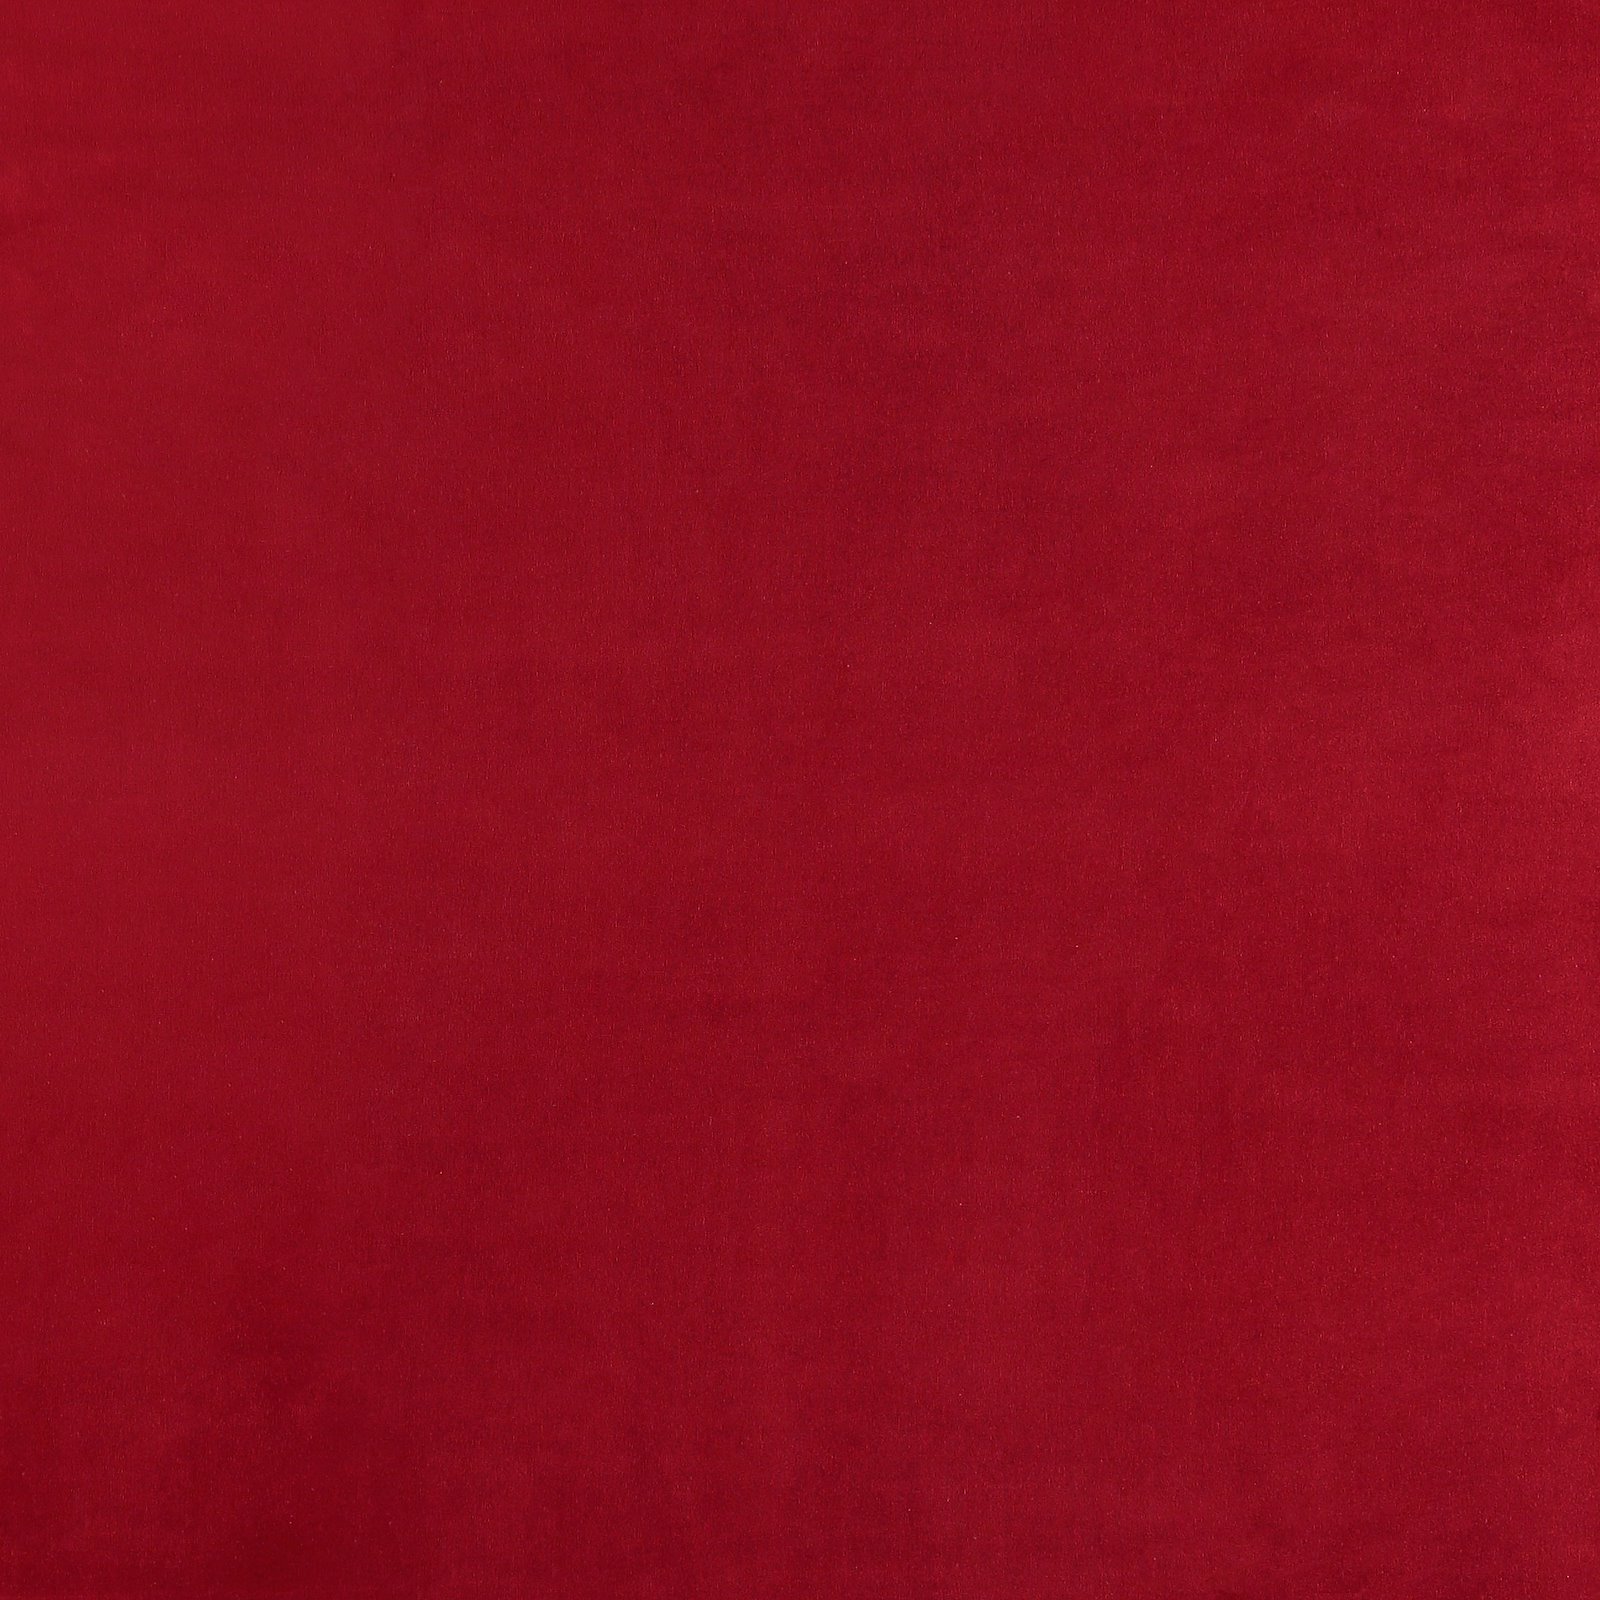 Woven cotton velvet red 480040_pack_solid